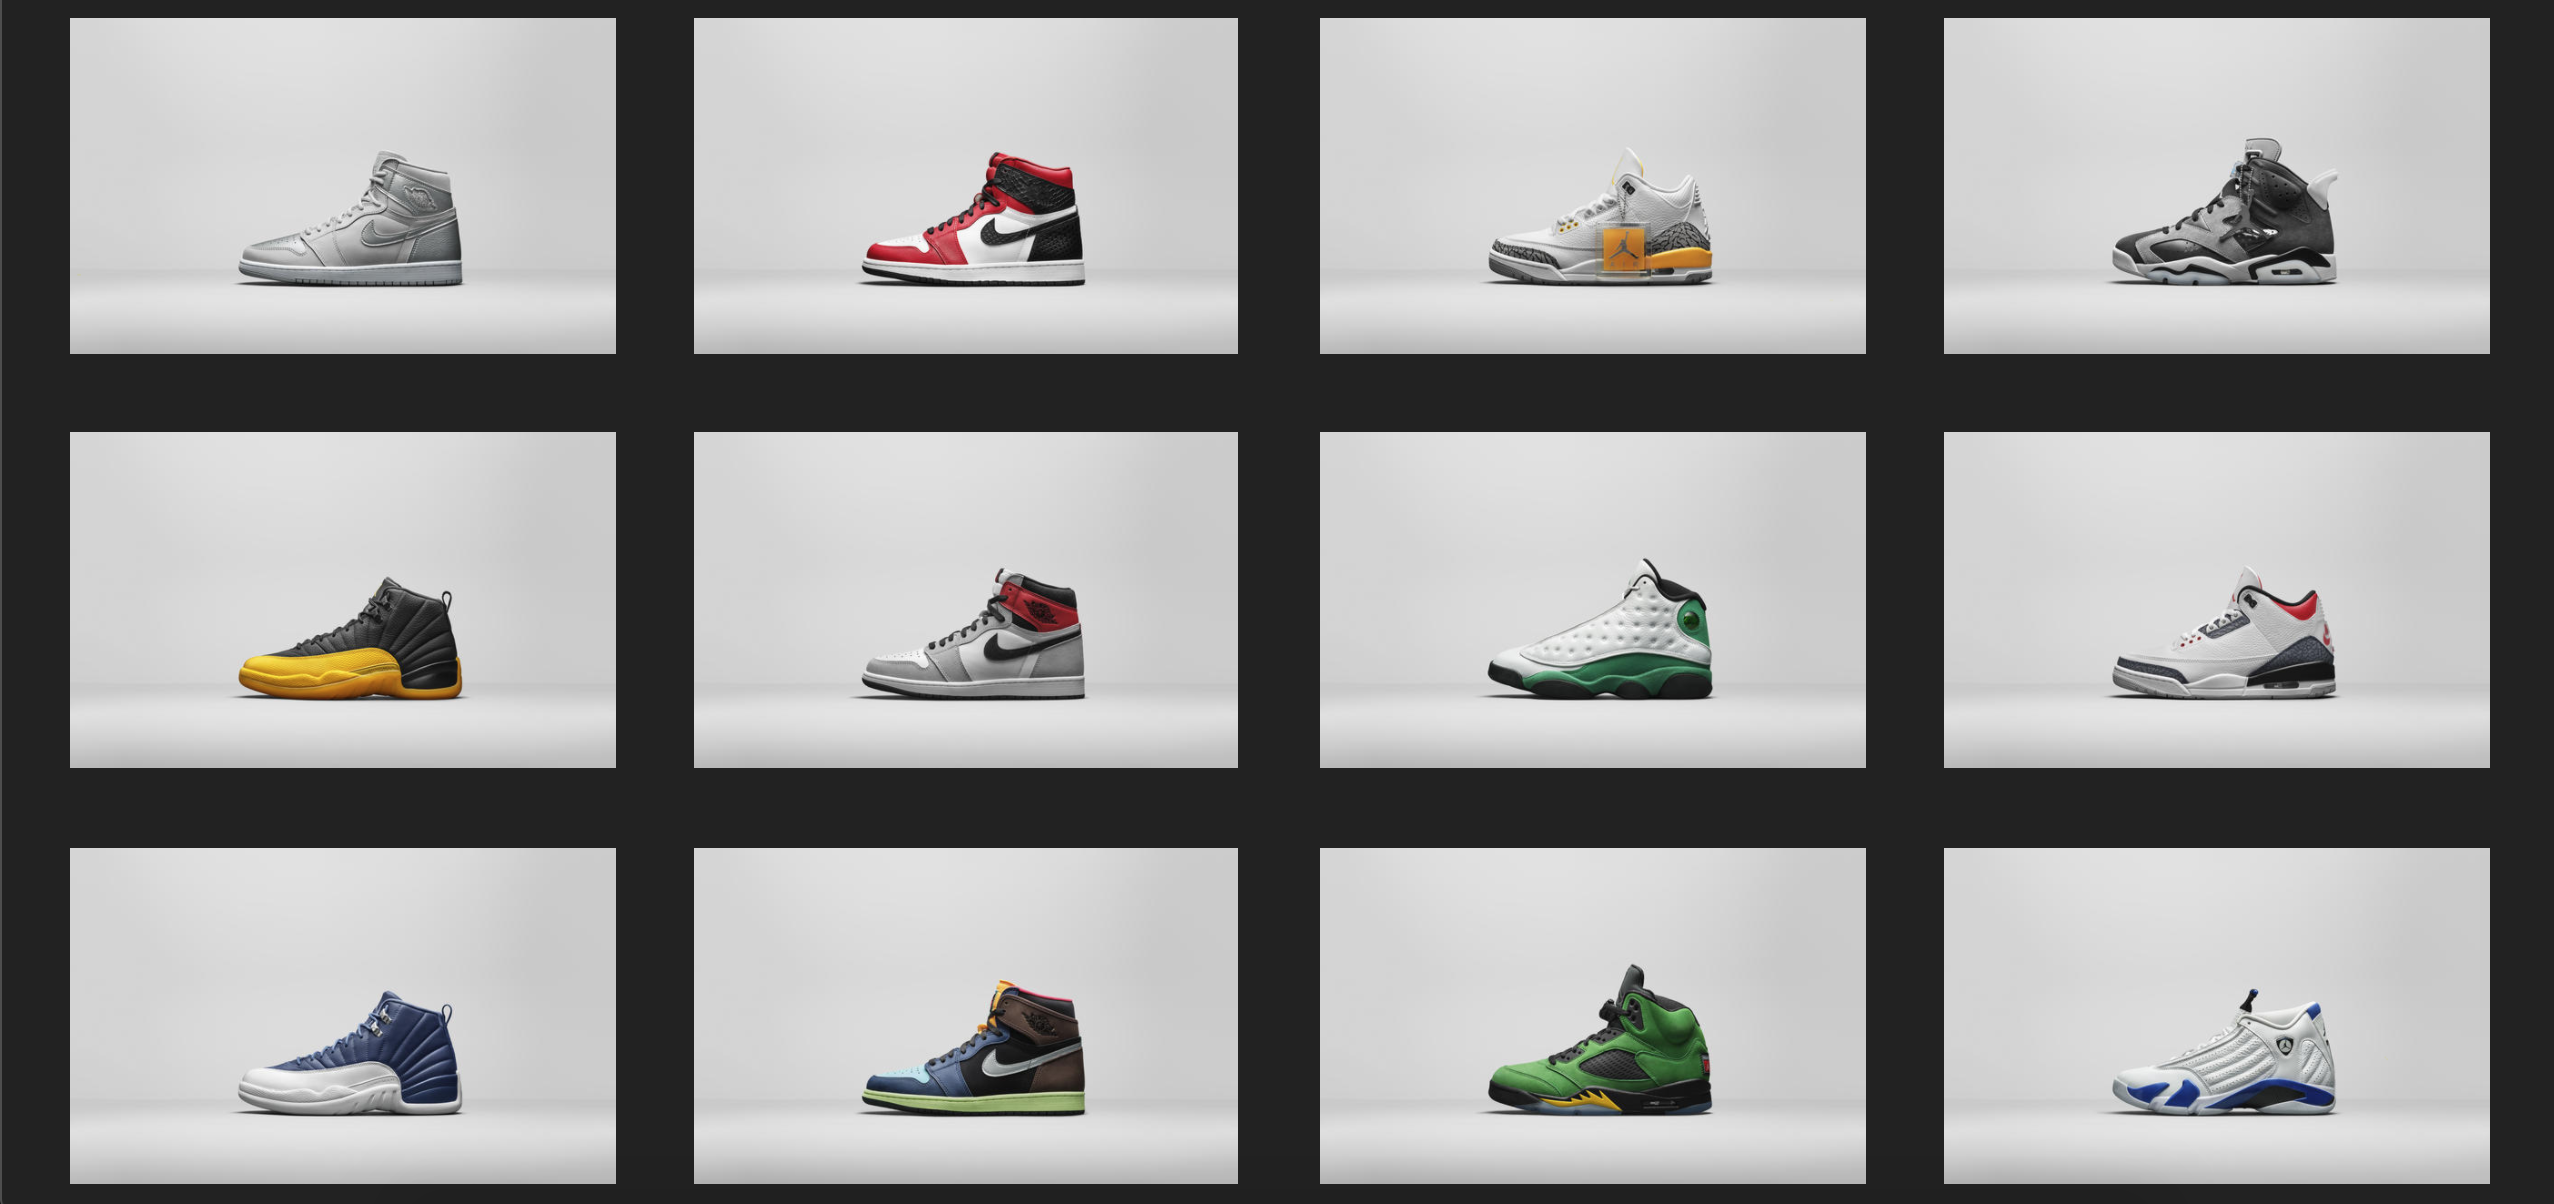 Jordan Brand Unveils Upcoming Fall 2020 Retro Footwear Collection ...